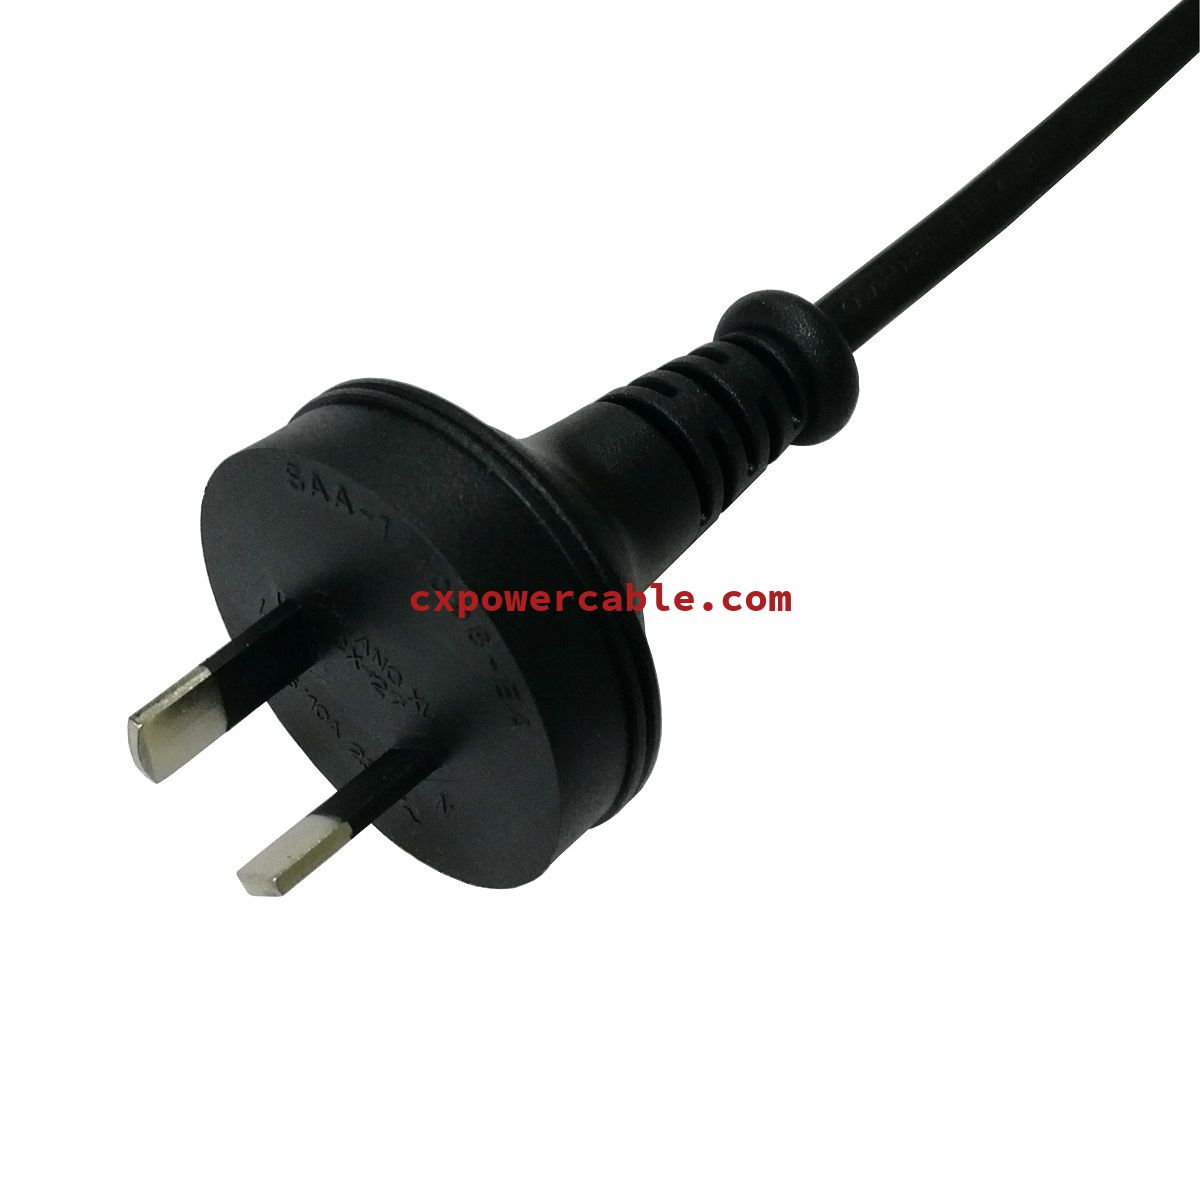 AUS style 2pin plug SAA certified + figure 8 tail plug power cable